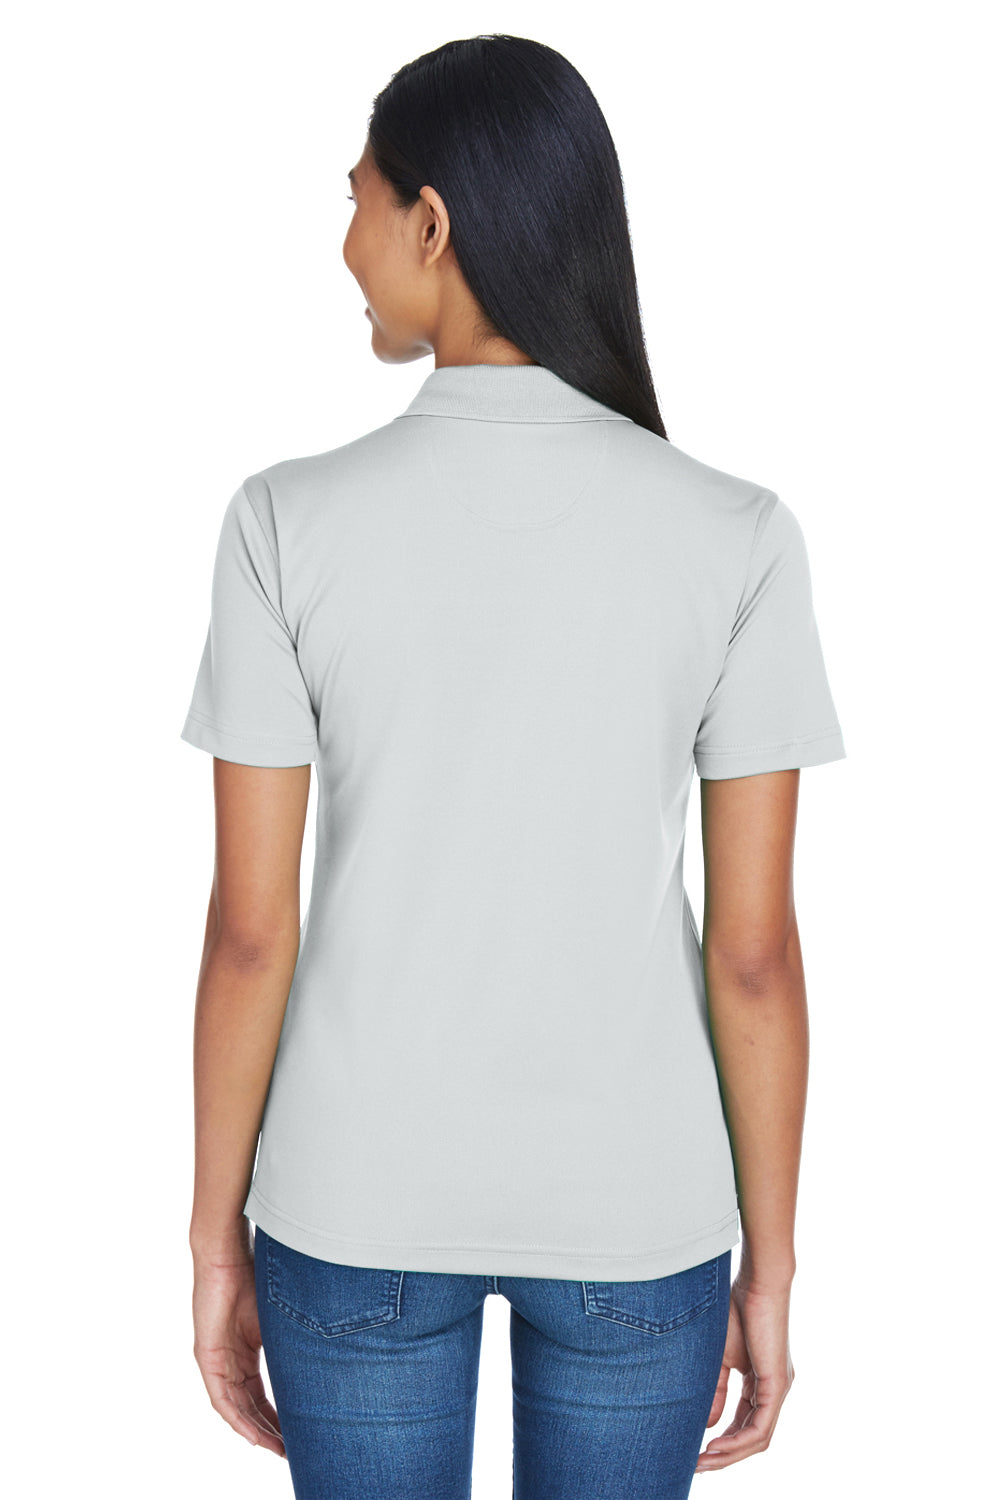 UltraClub 8404 Womens Cool & Dry Moisture Wicking Short Sleeve Polo Shirt Grey Back